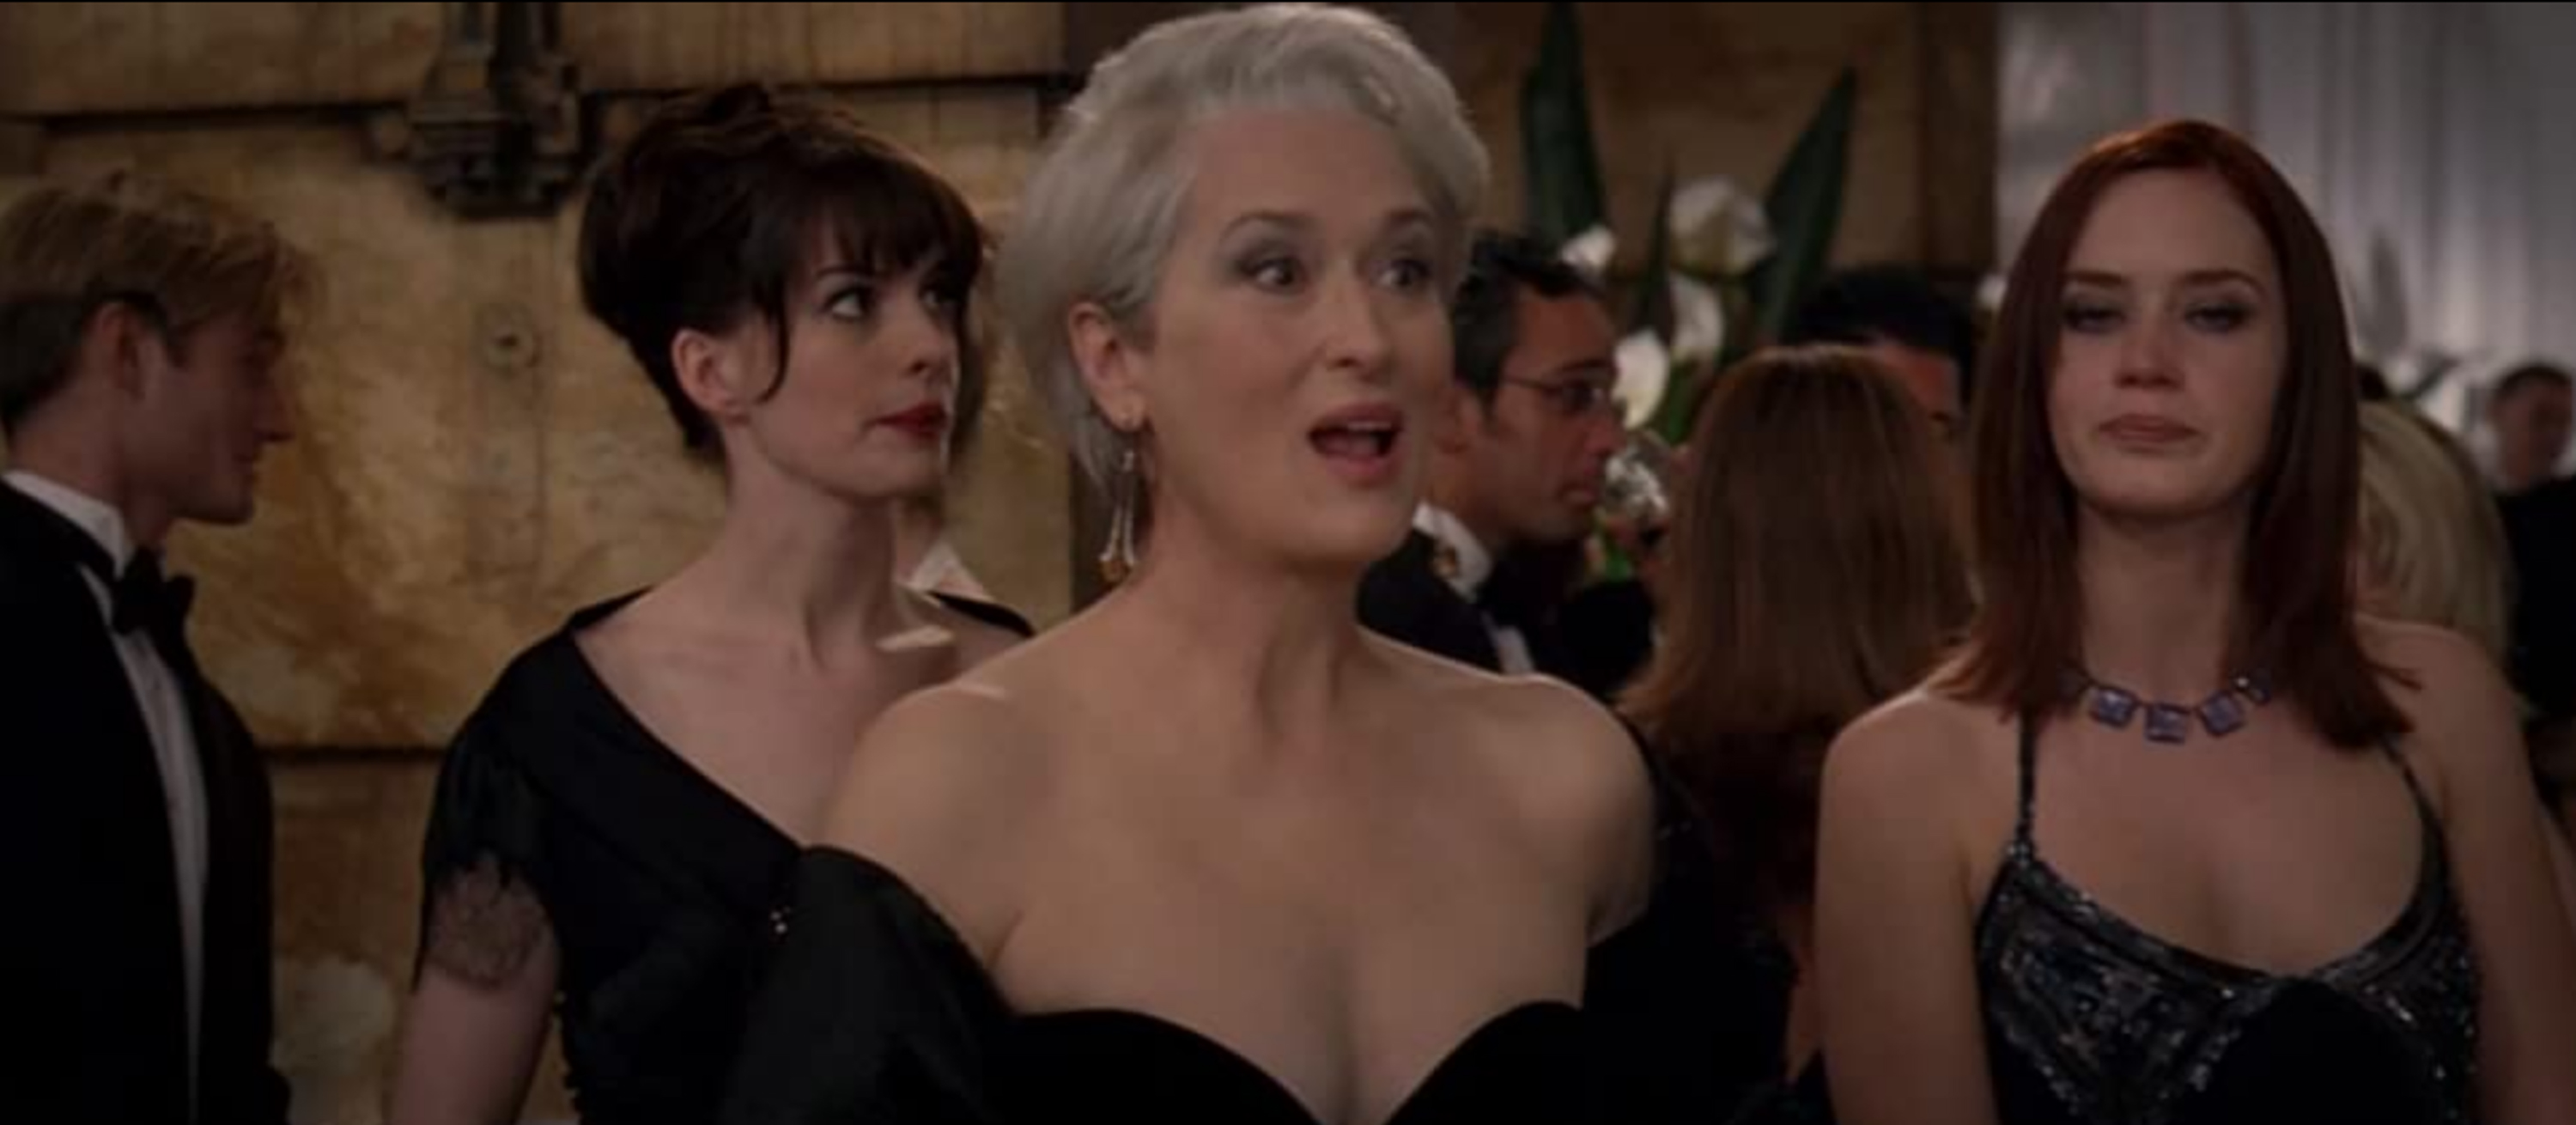 Meryl Streep, Anne Hathaway, and Emily Blunt in “The Devil Wears Prada” (2006)